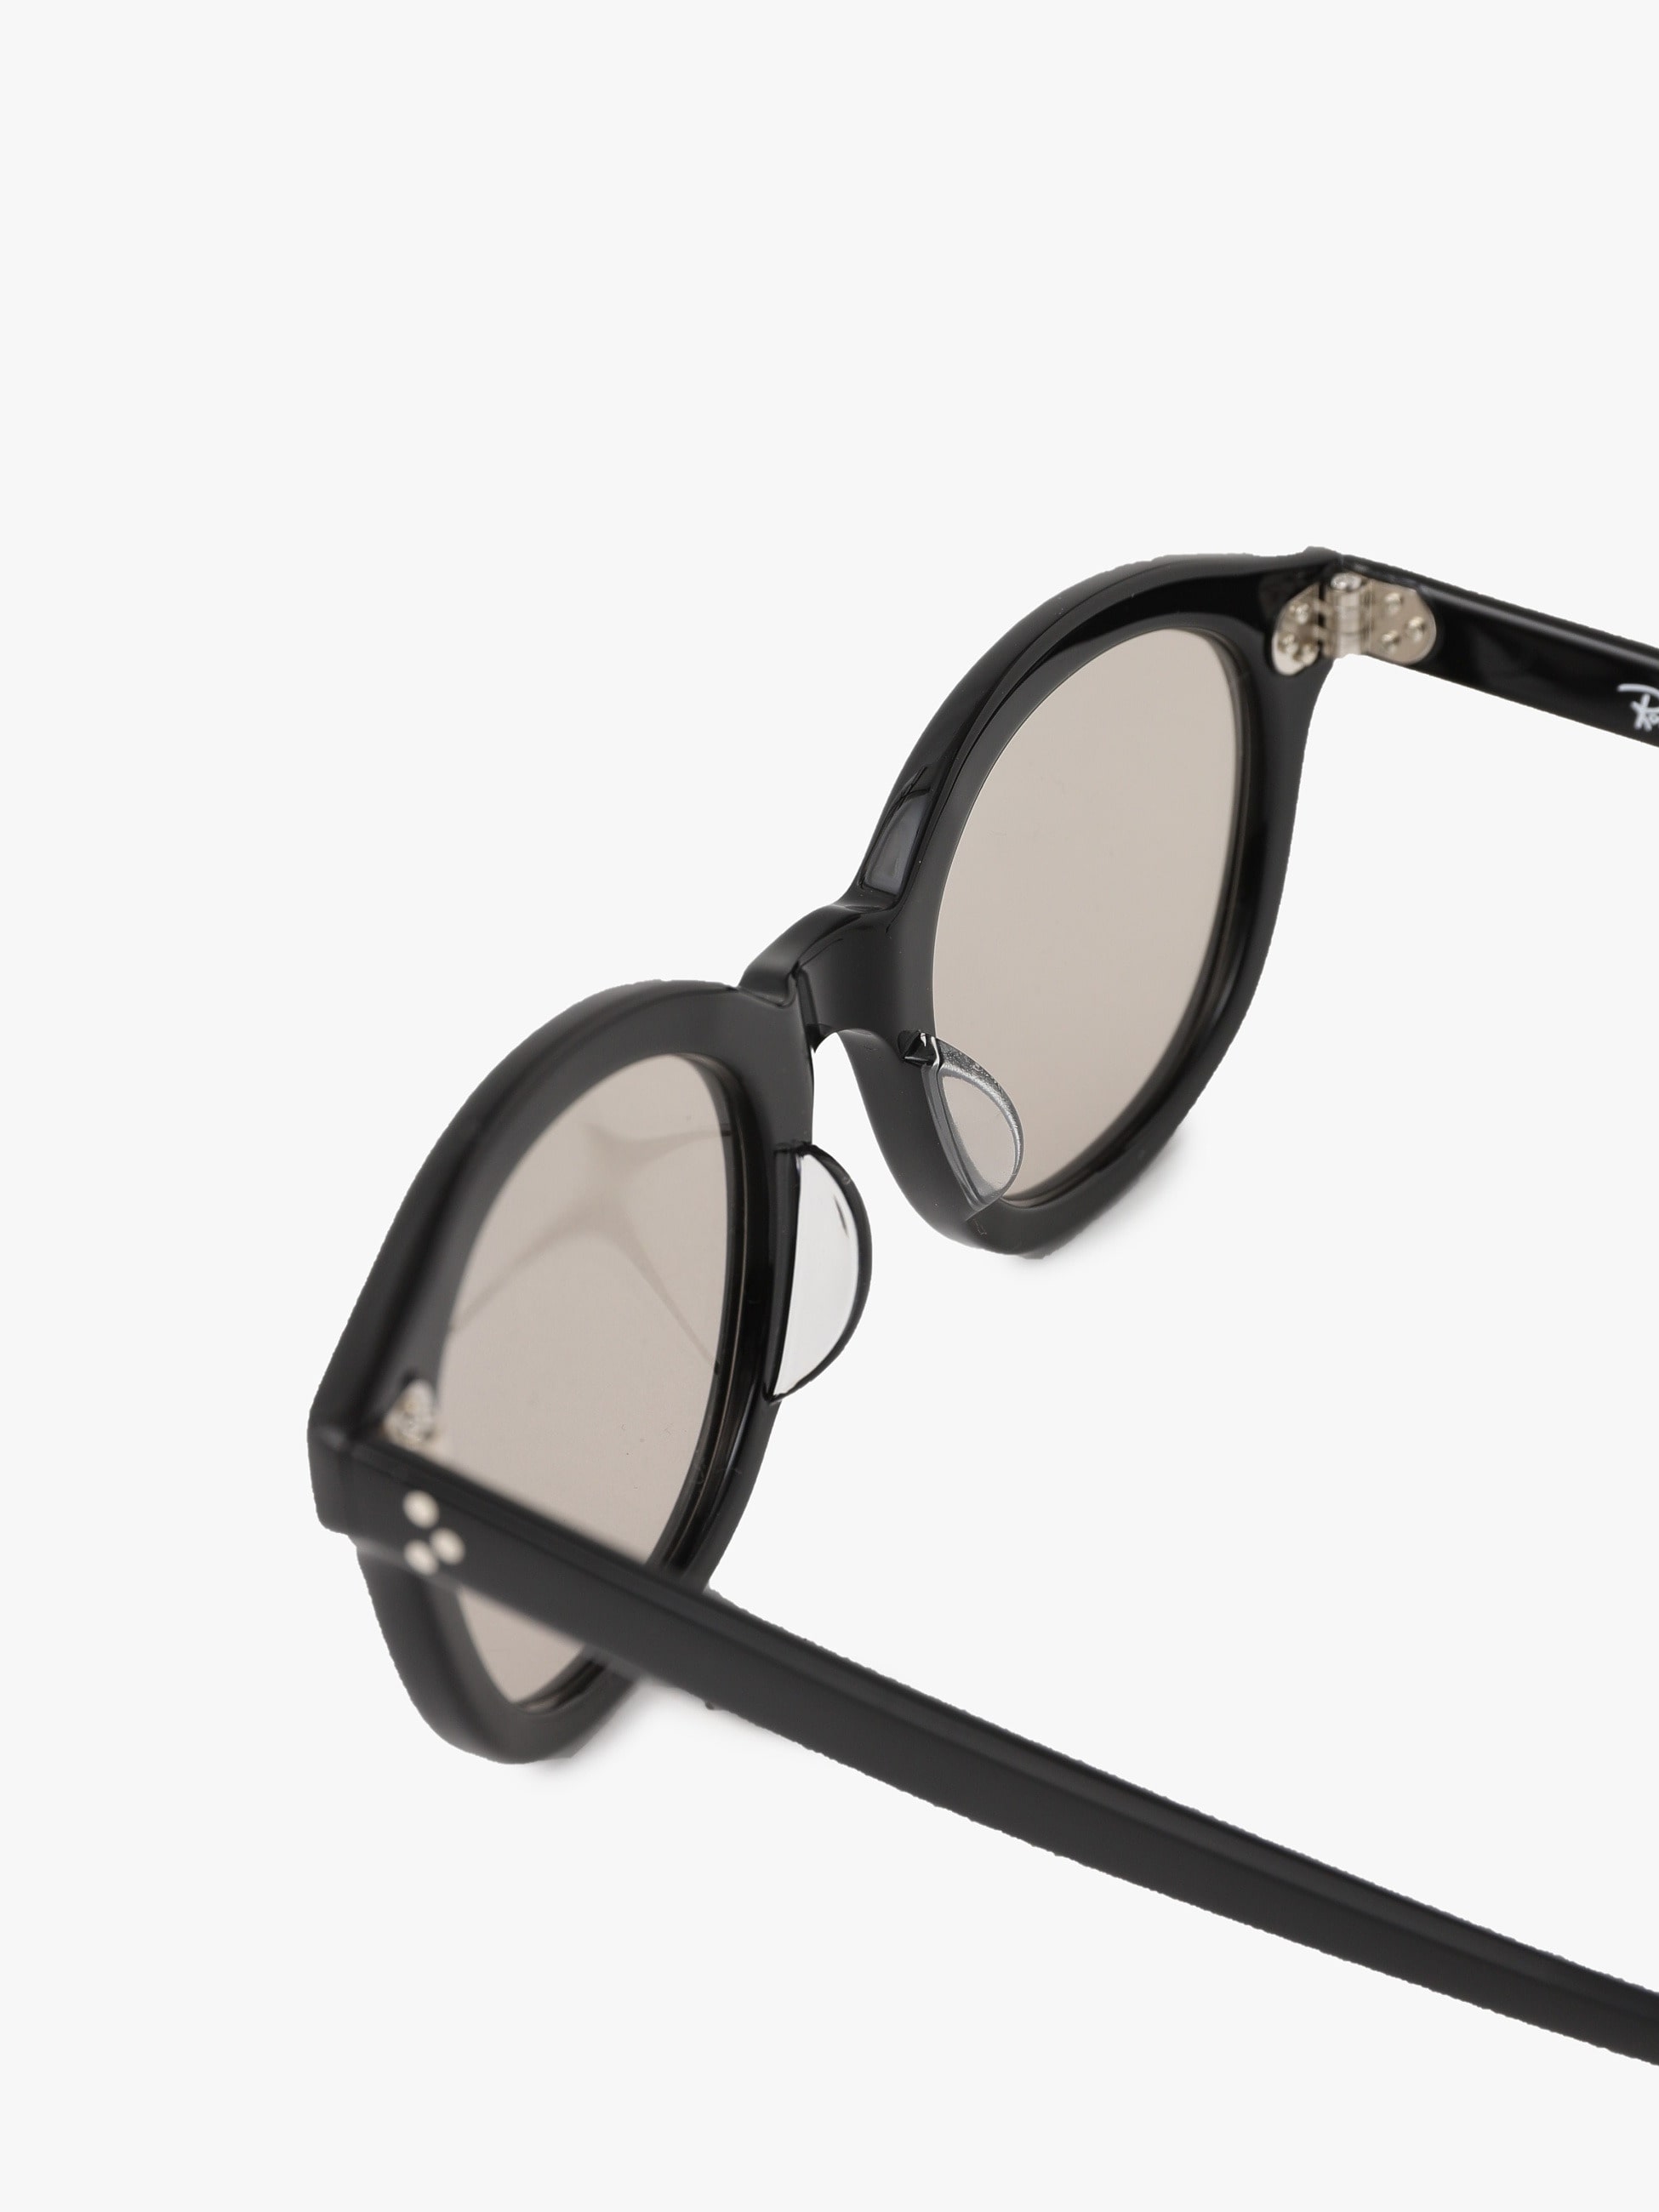 Sunglasses (RH-15 black)